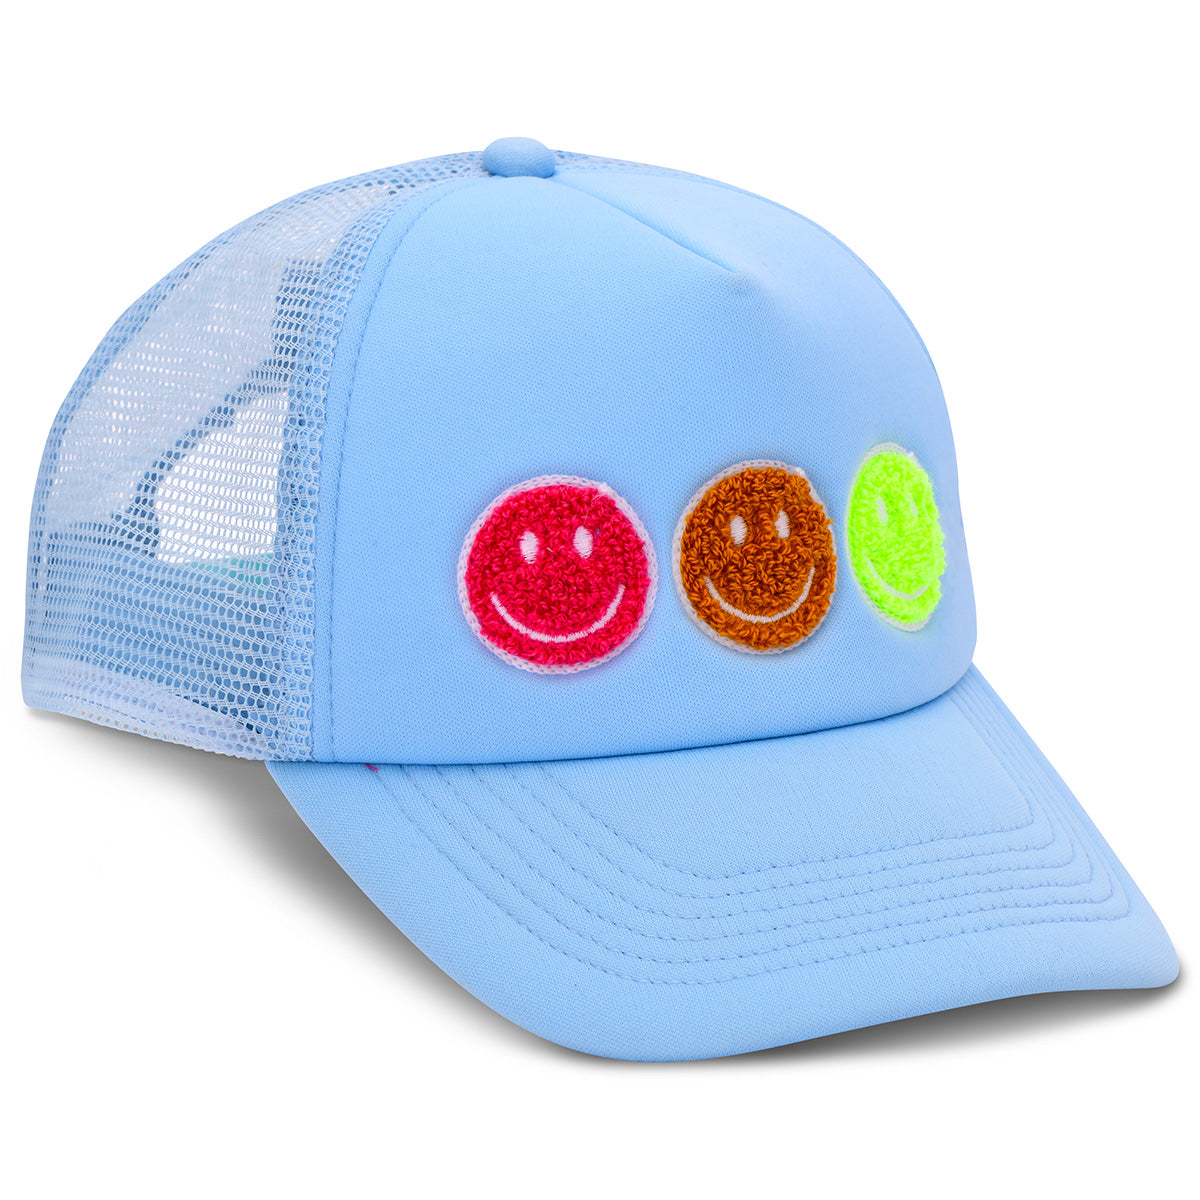 You Make Me Smile Trucker Hat